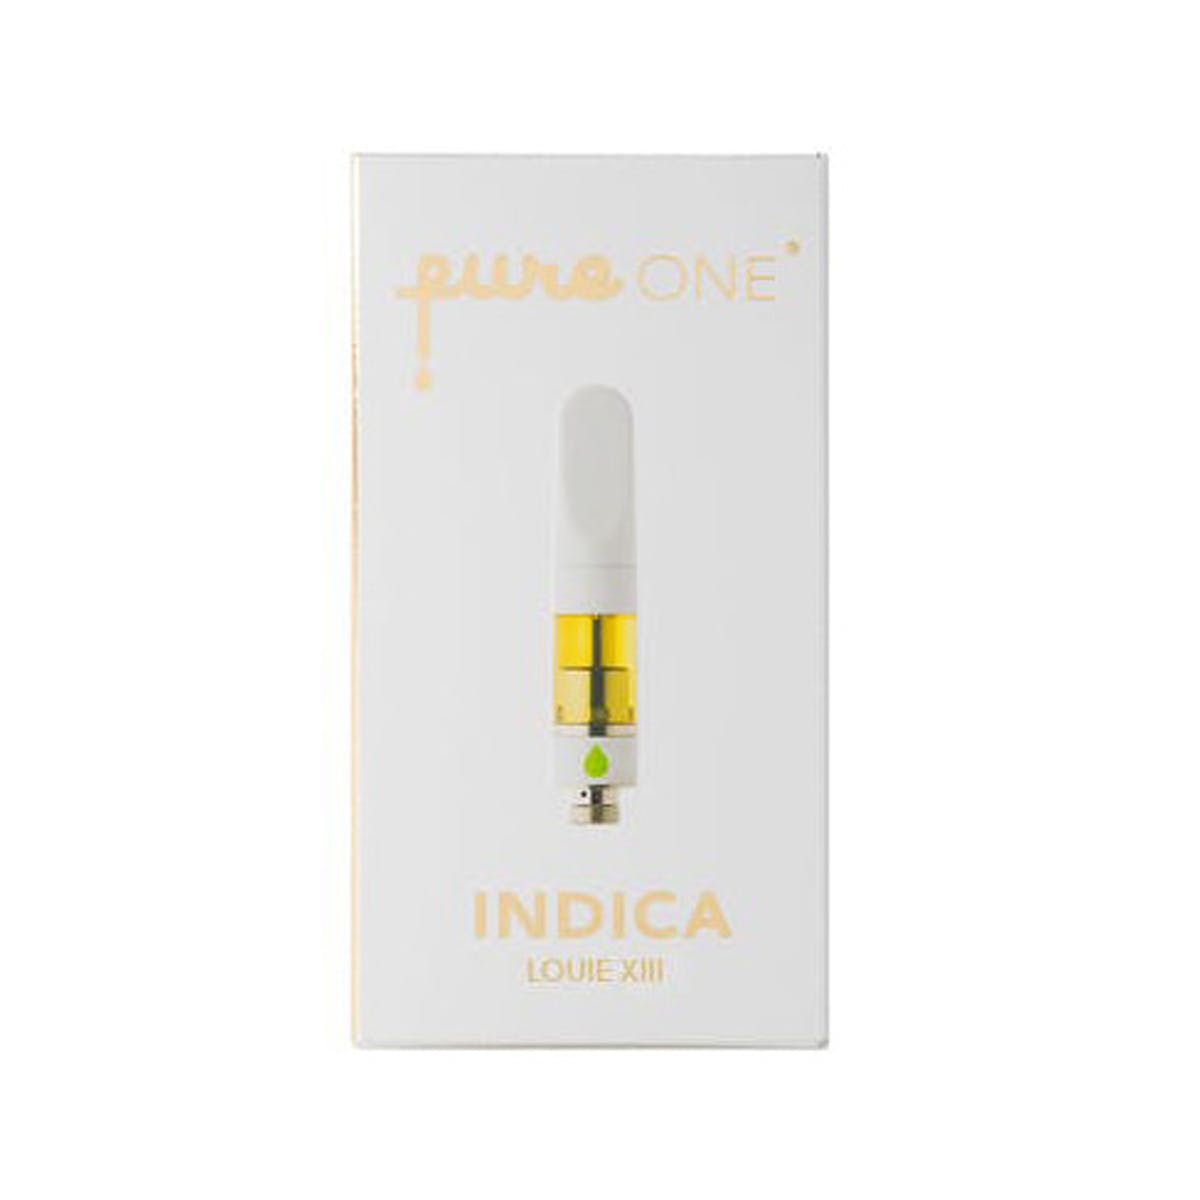 Indica PureONE CO2 Cartridge - Louie XIII